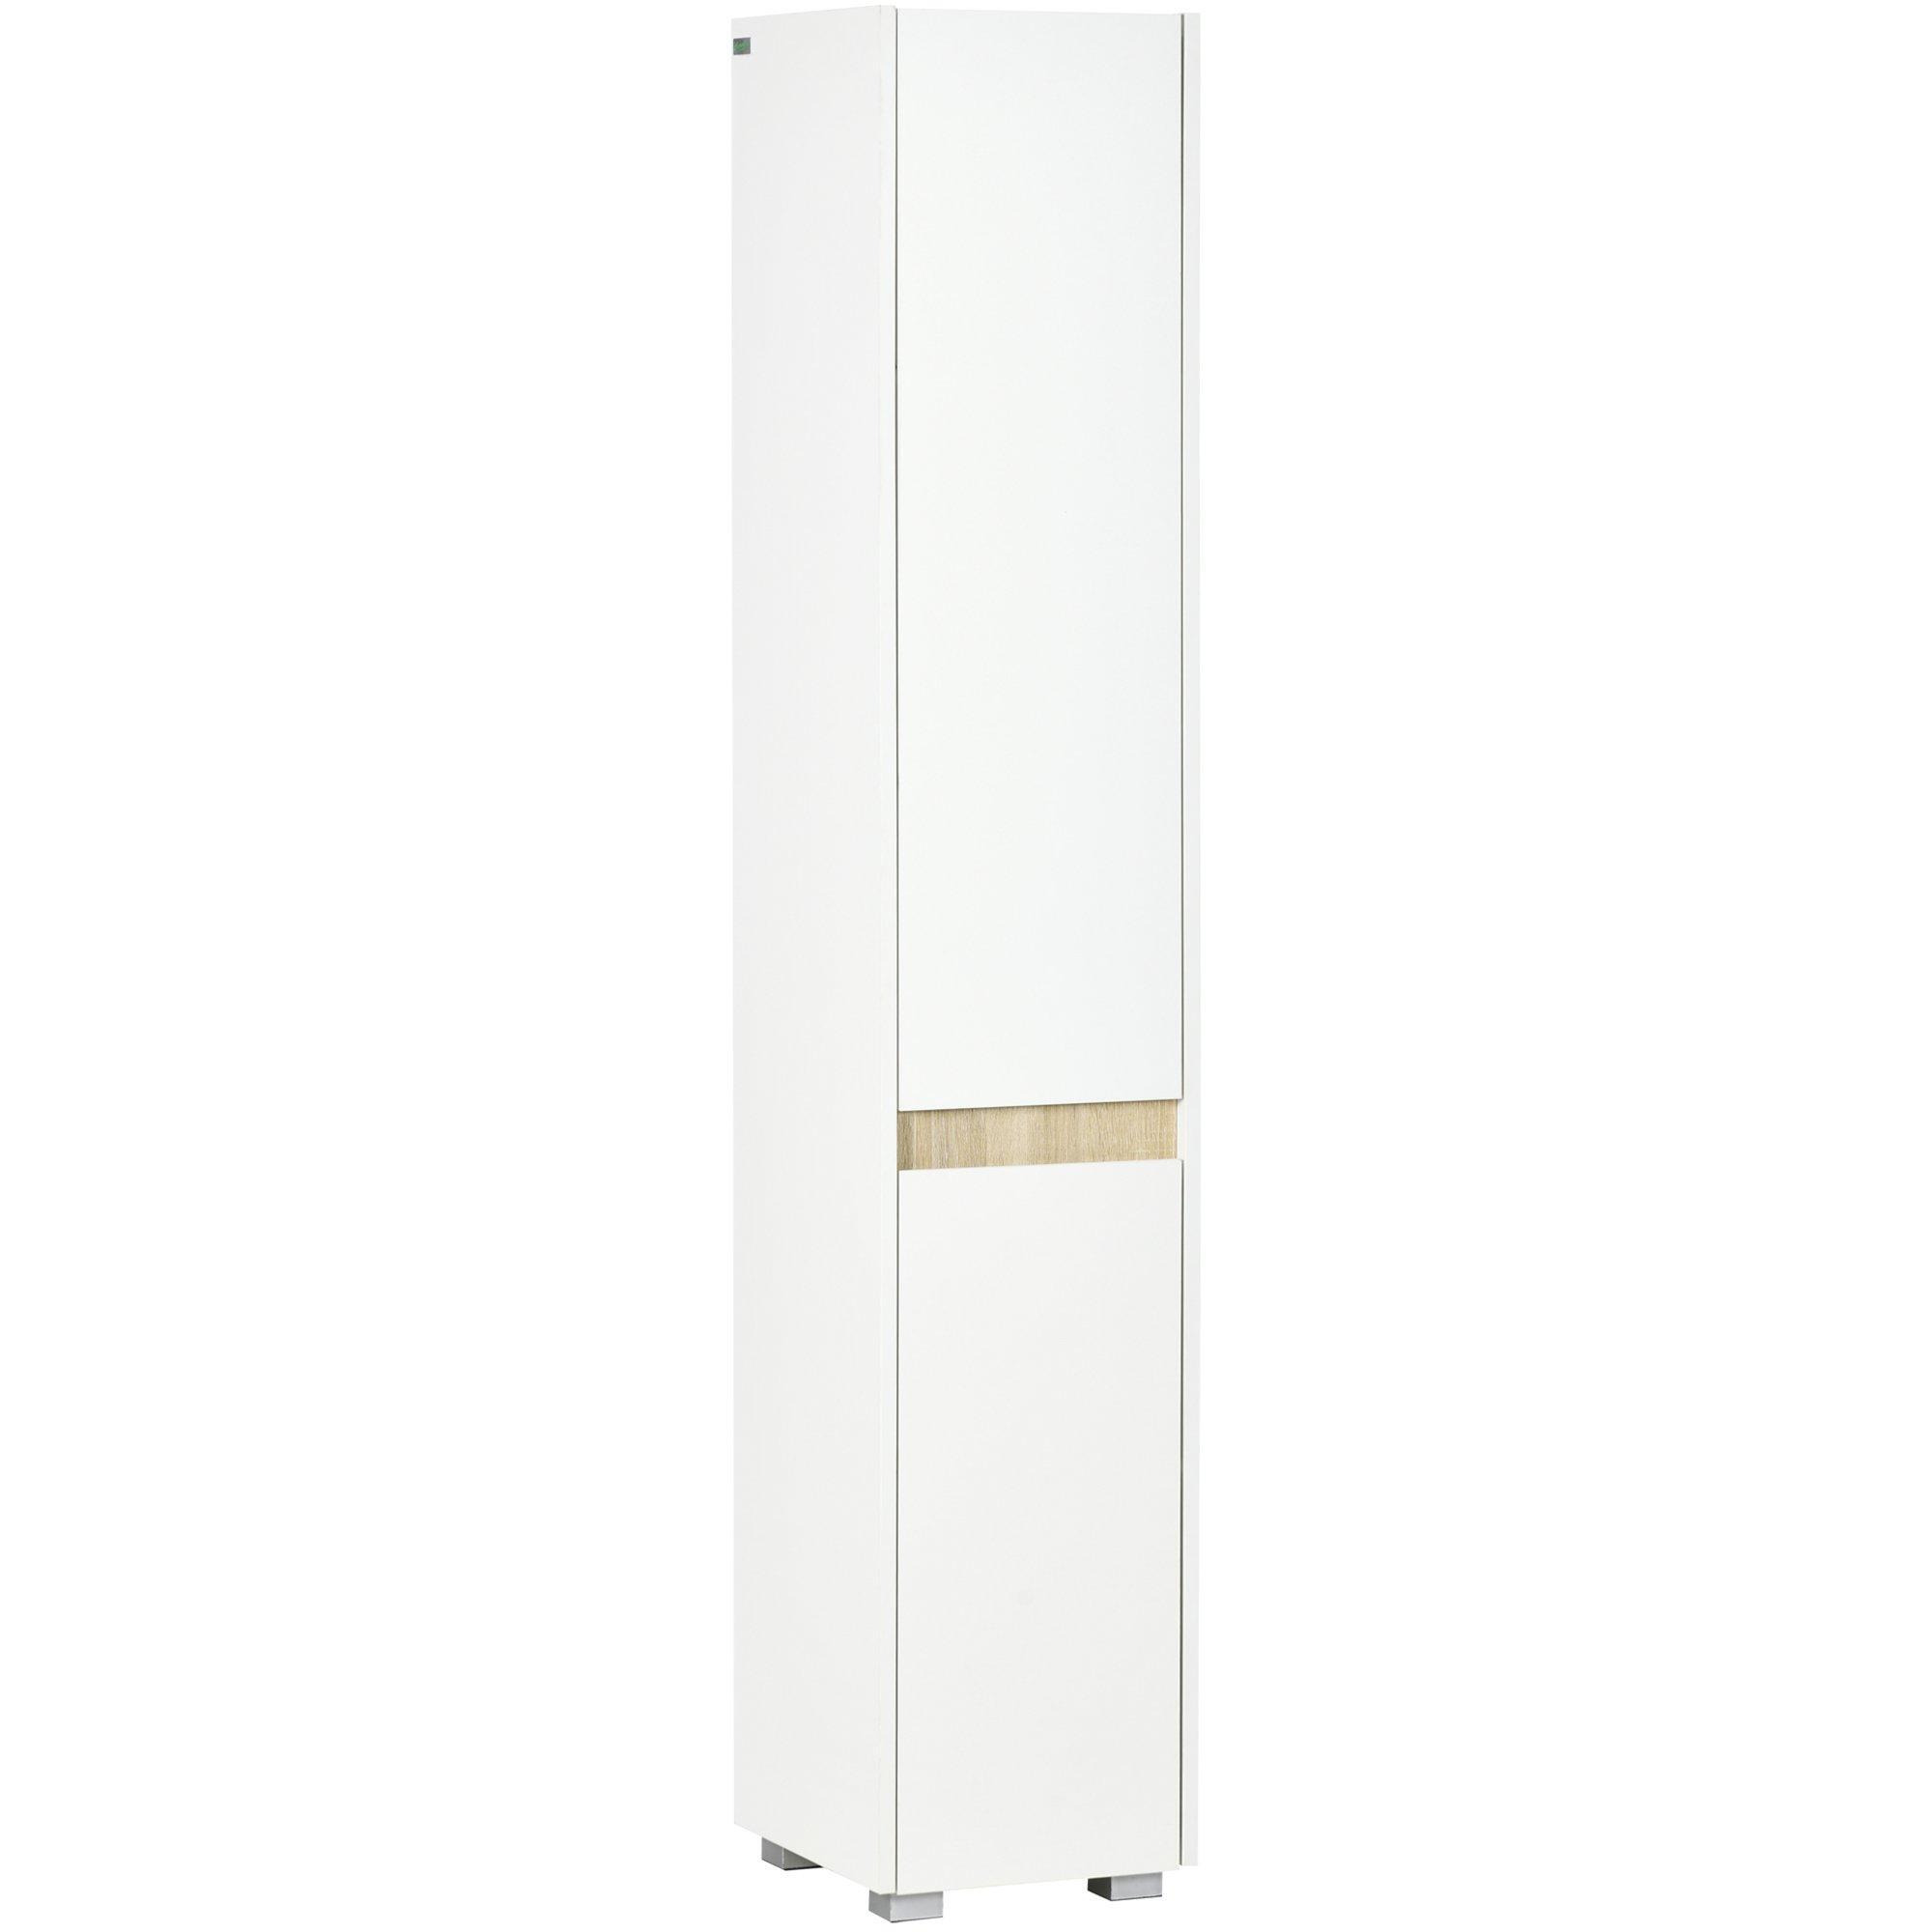 Tall Bathroom Cabinet Modern Freestanding Tallboy Adjustable Shelves - image 1